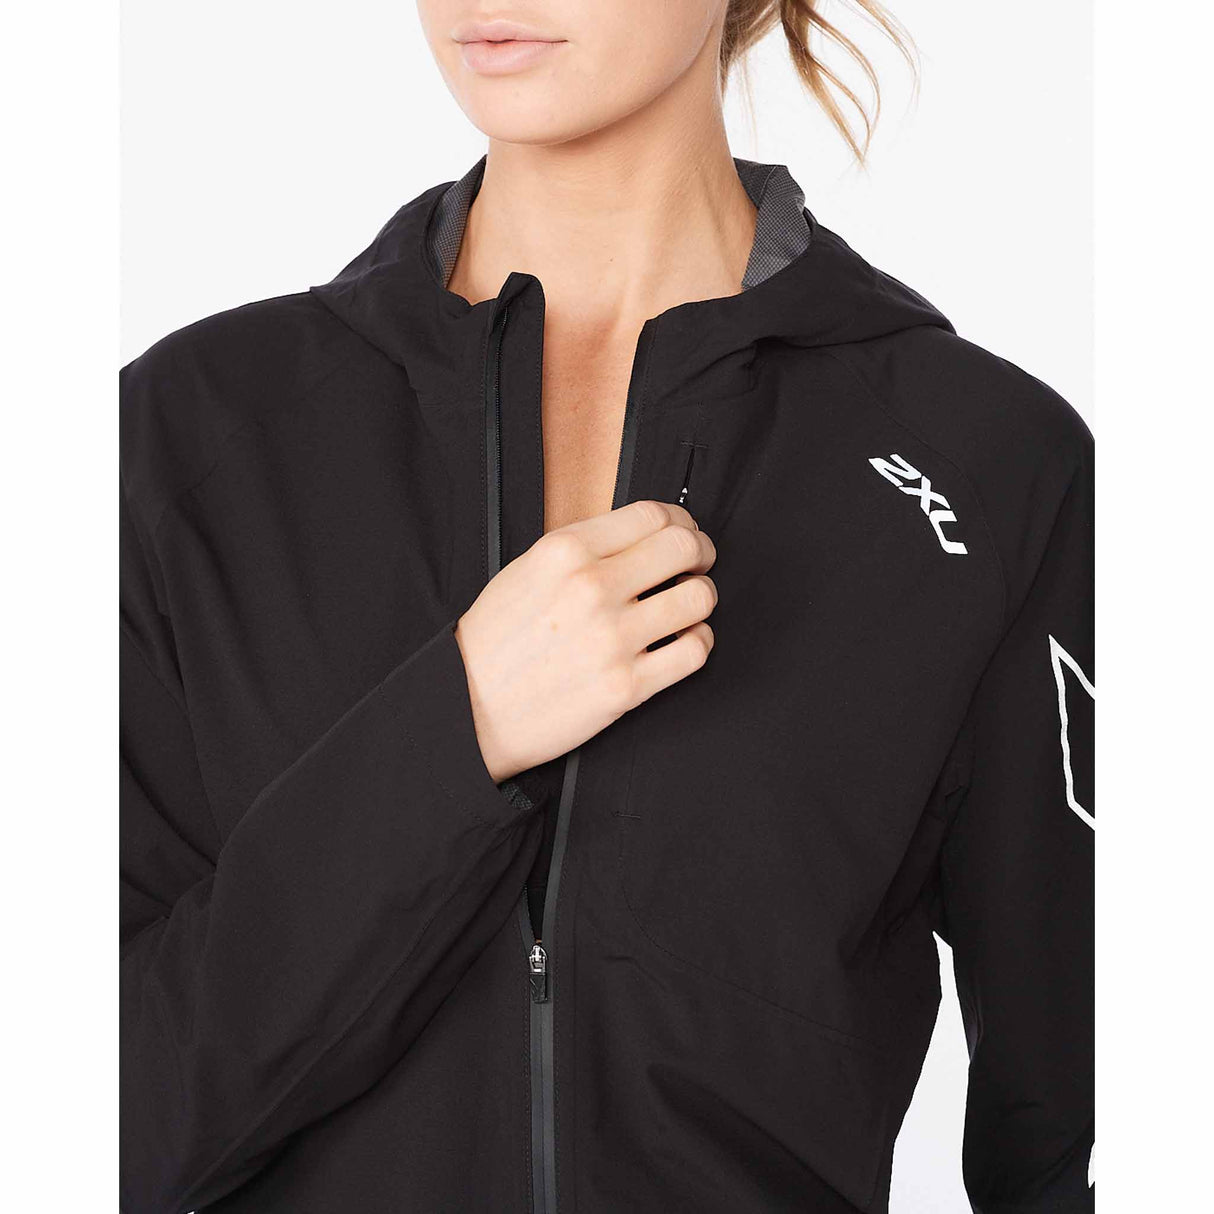 2XU Manteau imperméable Light Speed WP Jacket pour femme Black/Silver Reflective zip